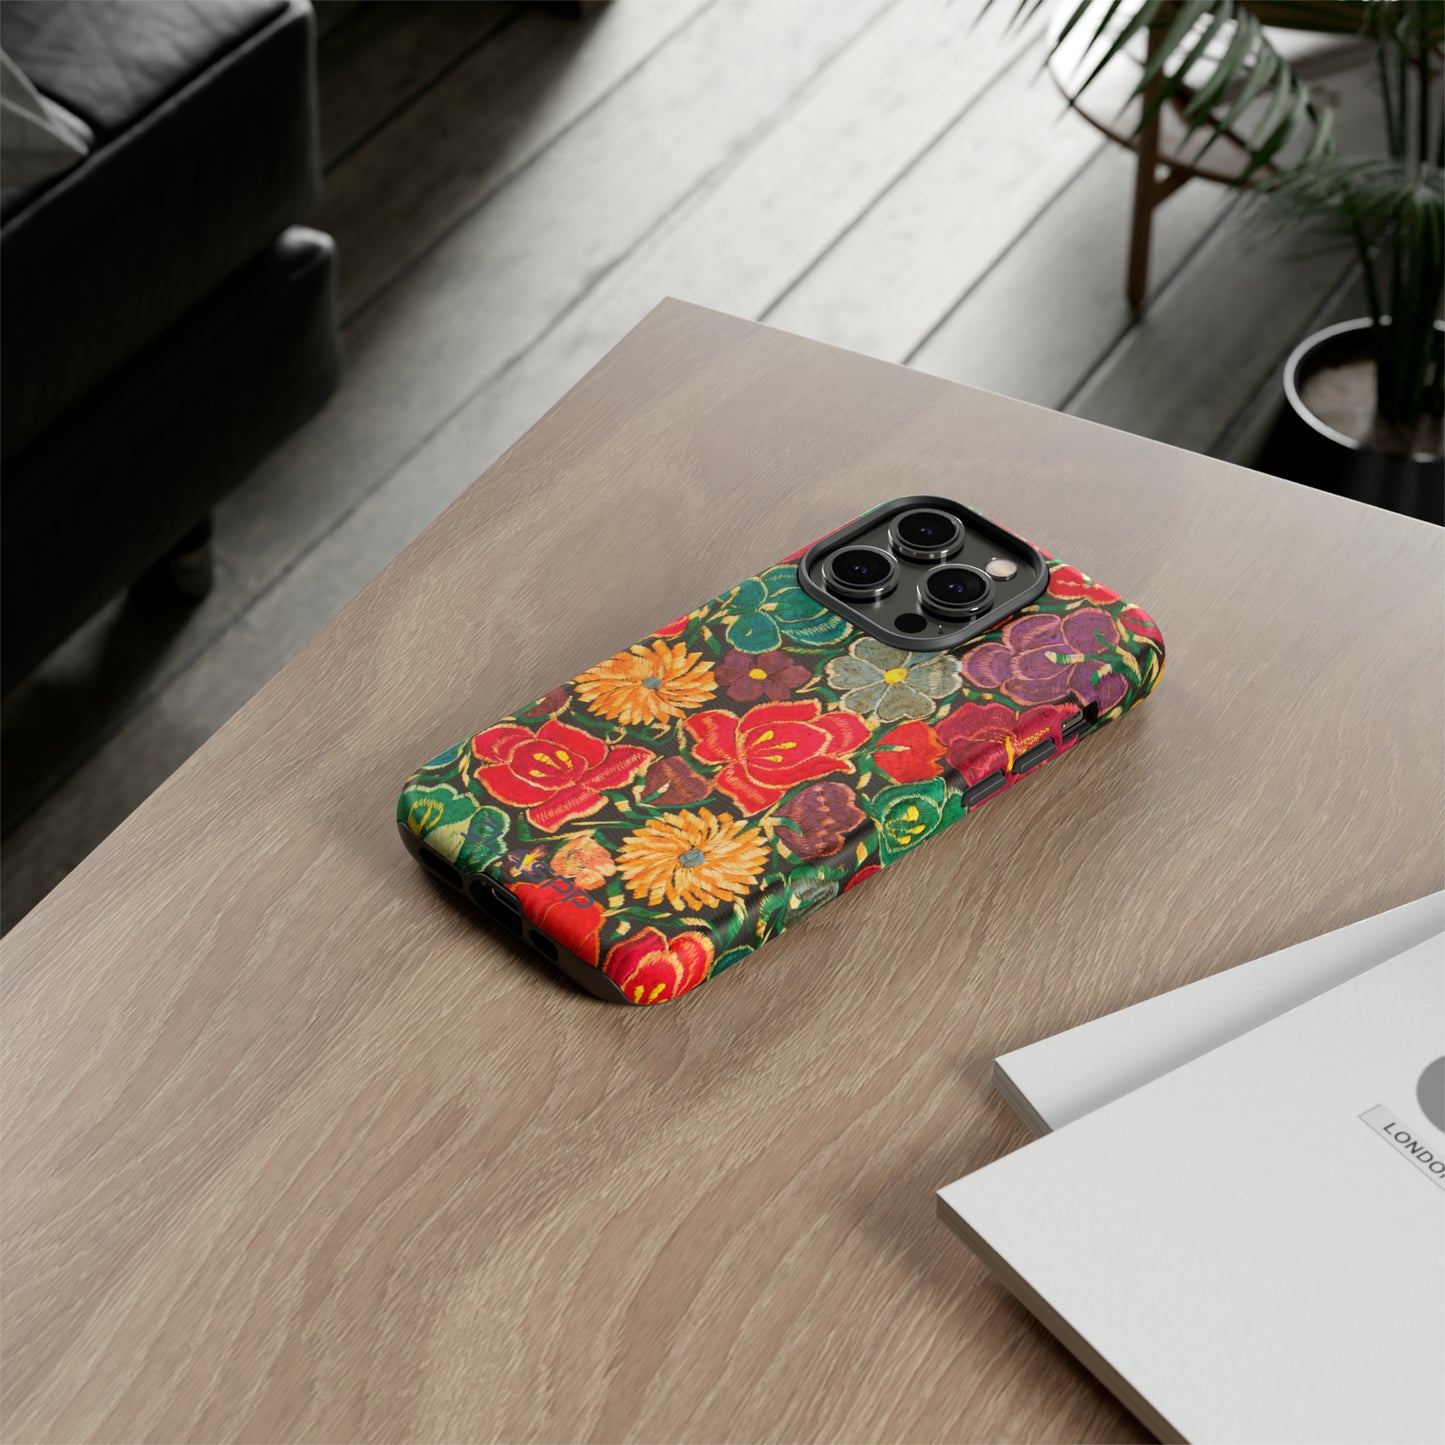 Bright Flowers | Hardshell Dual Layer Phone Case